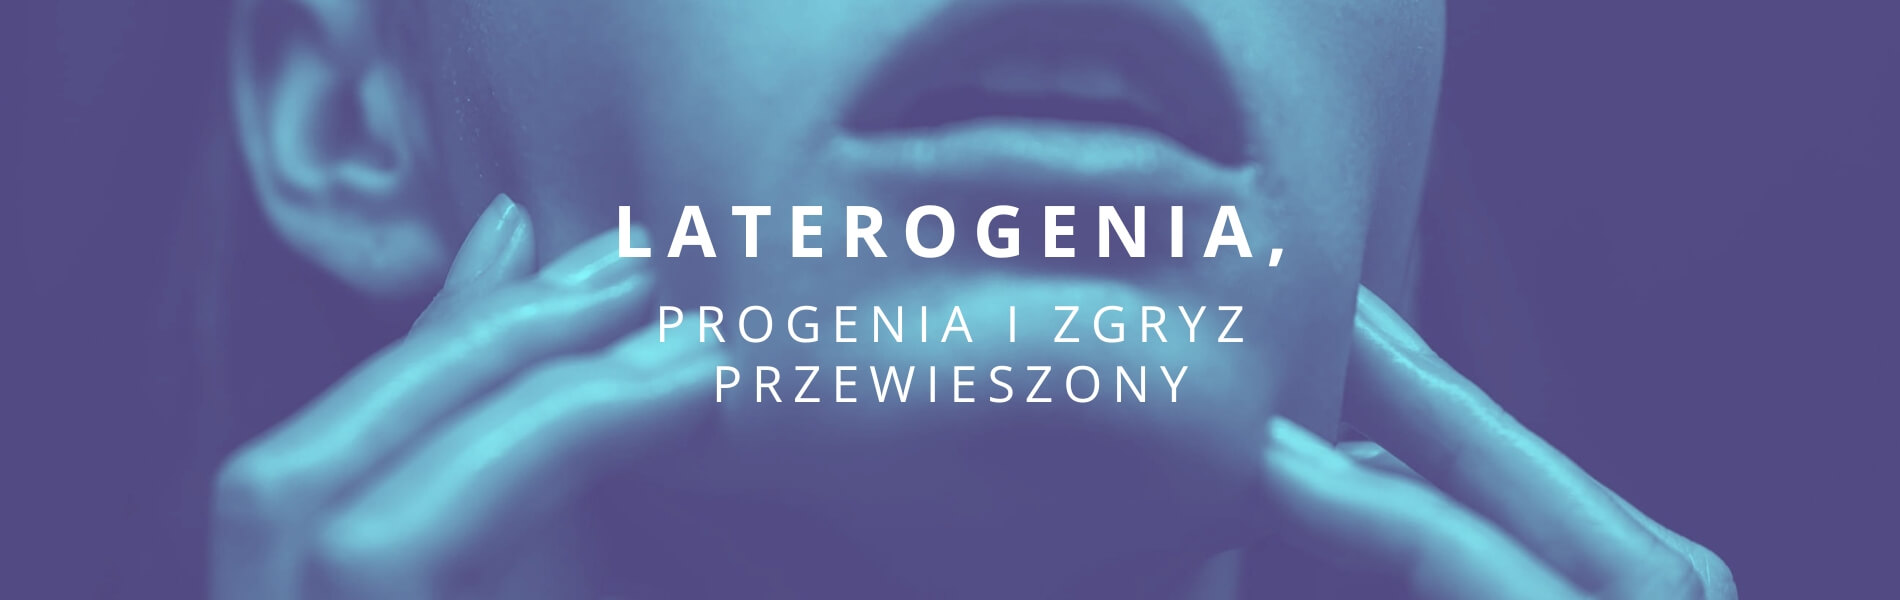 laterogenia